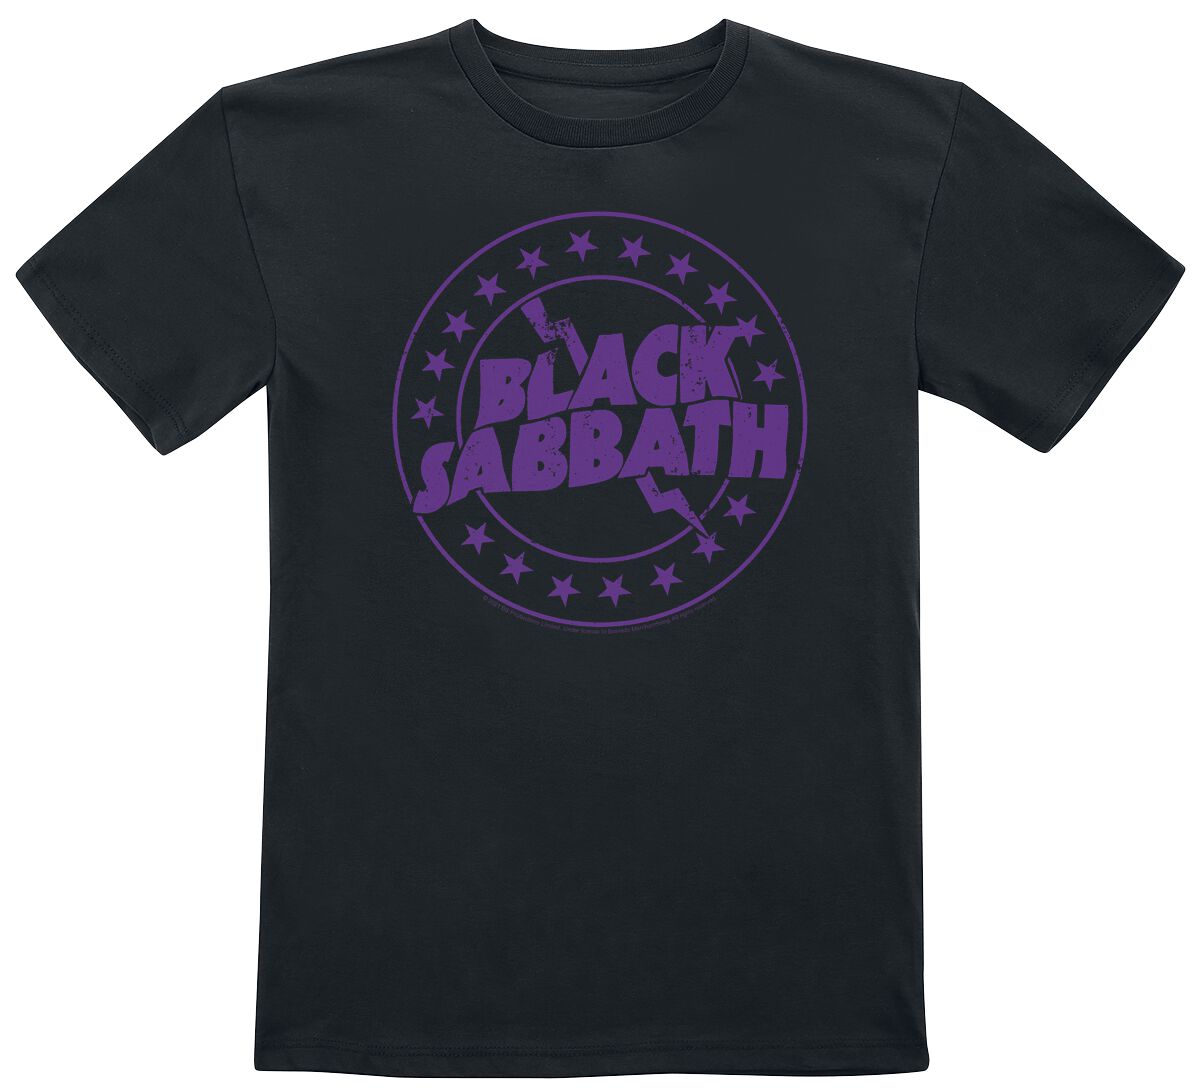 Black Sabbath Metal Kids - Emblem T-Shirt black